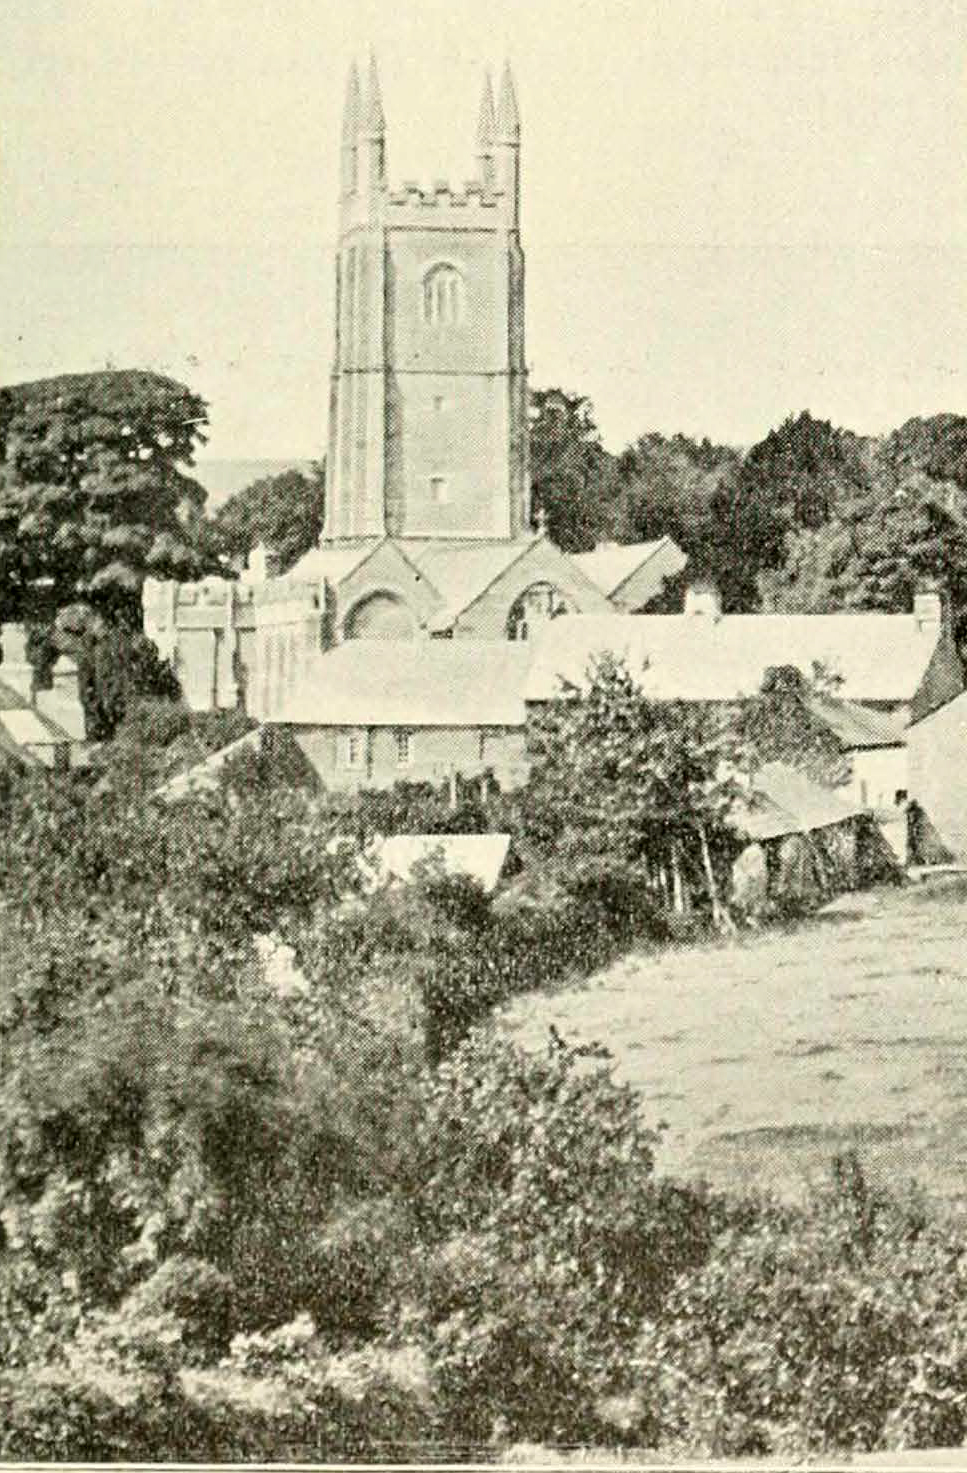 North Hill Church in 1900